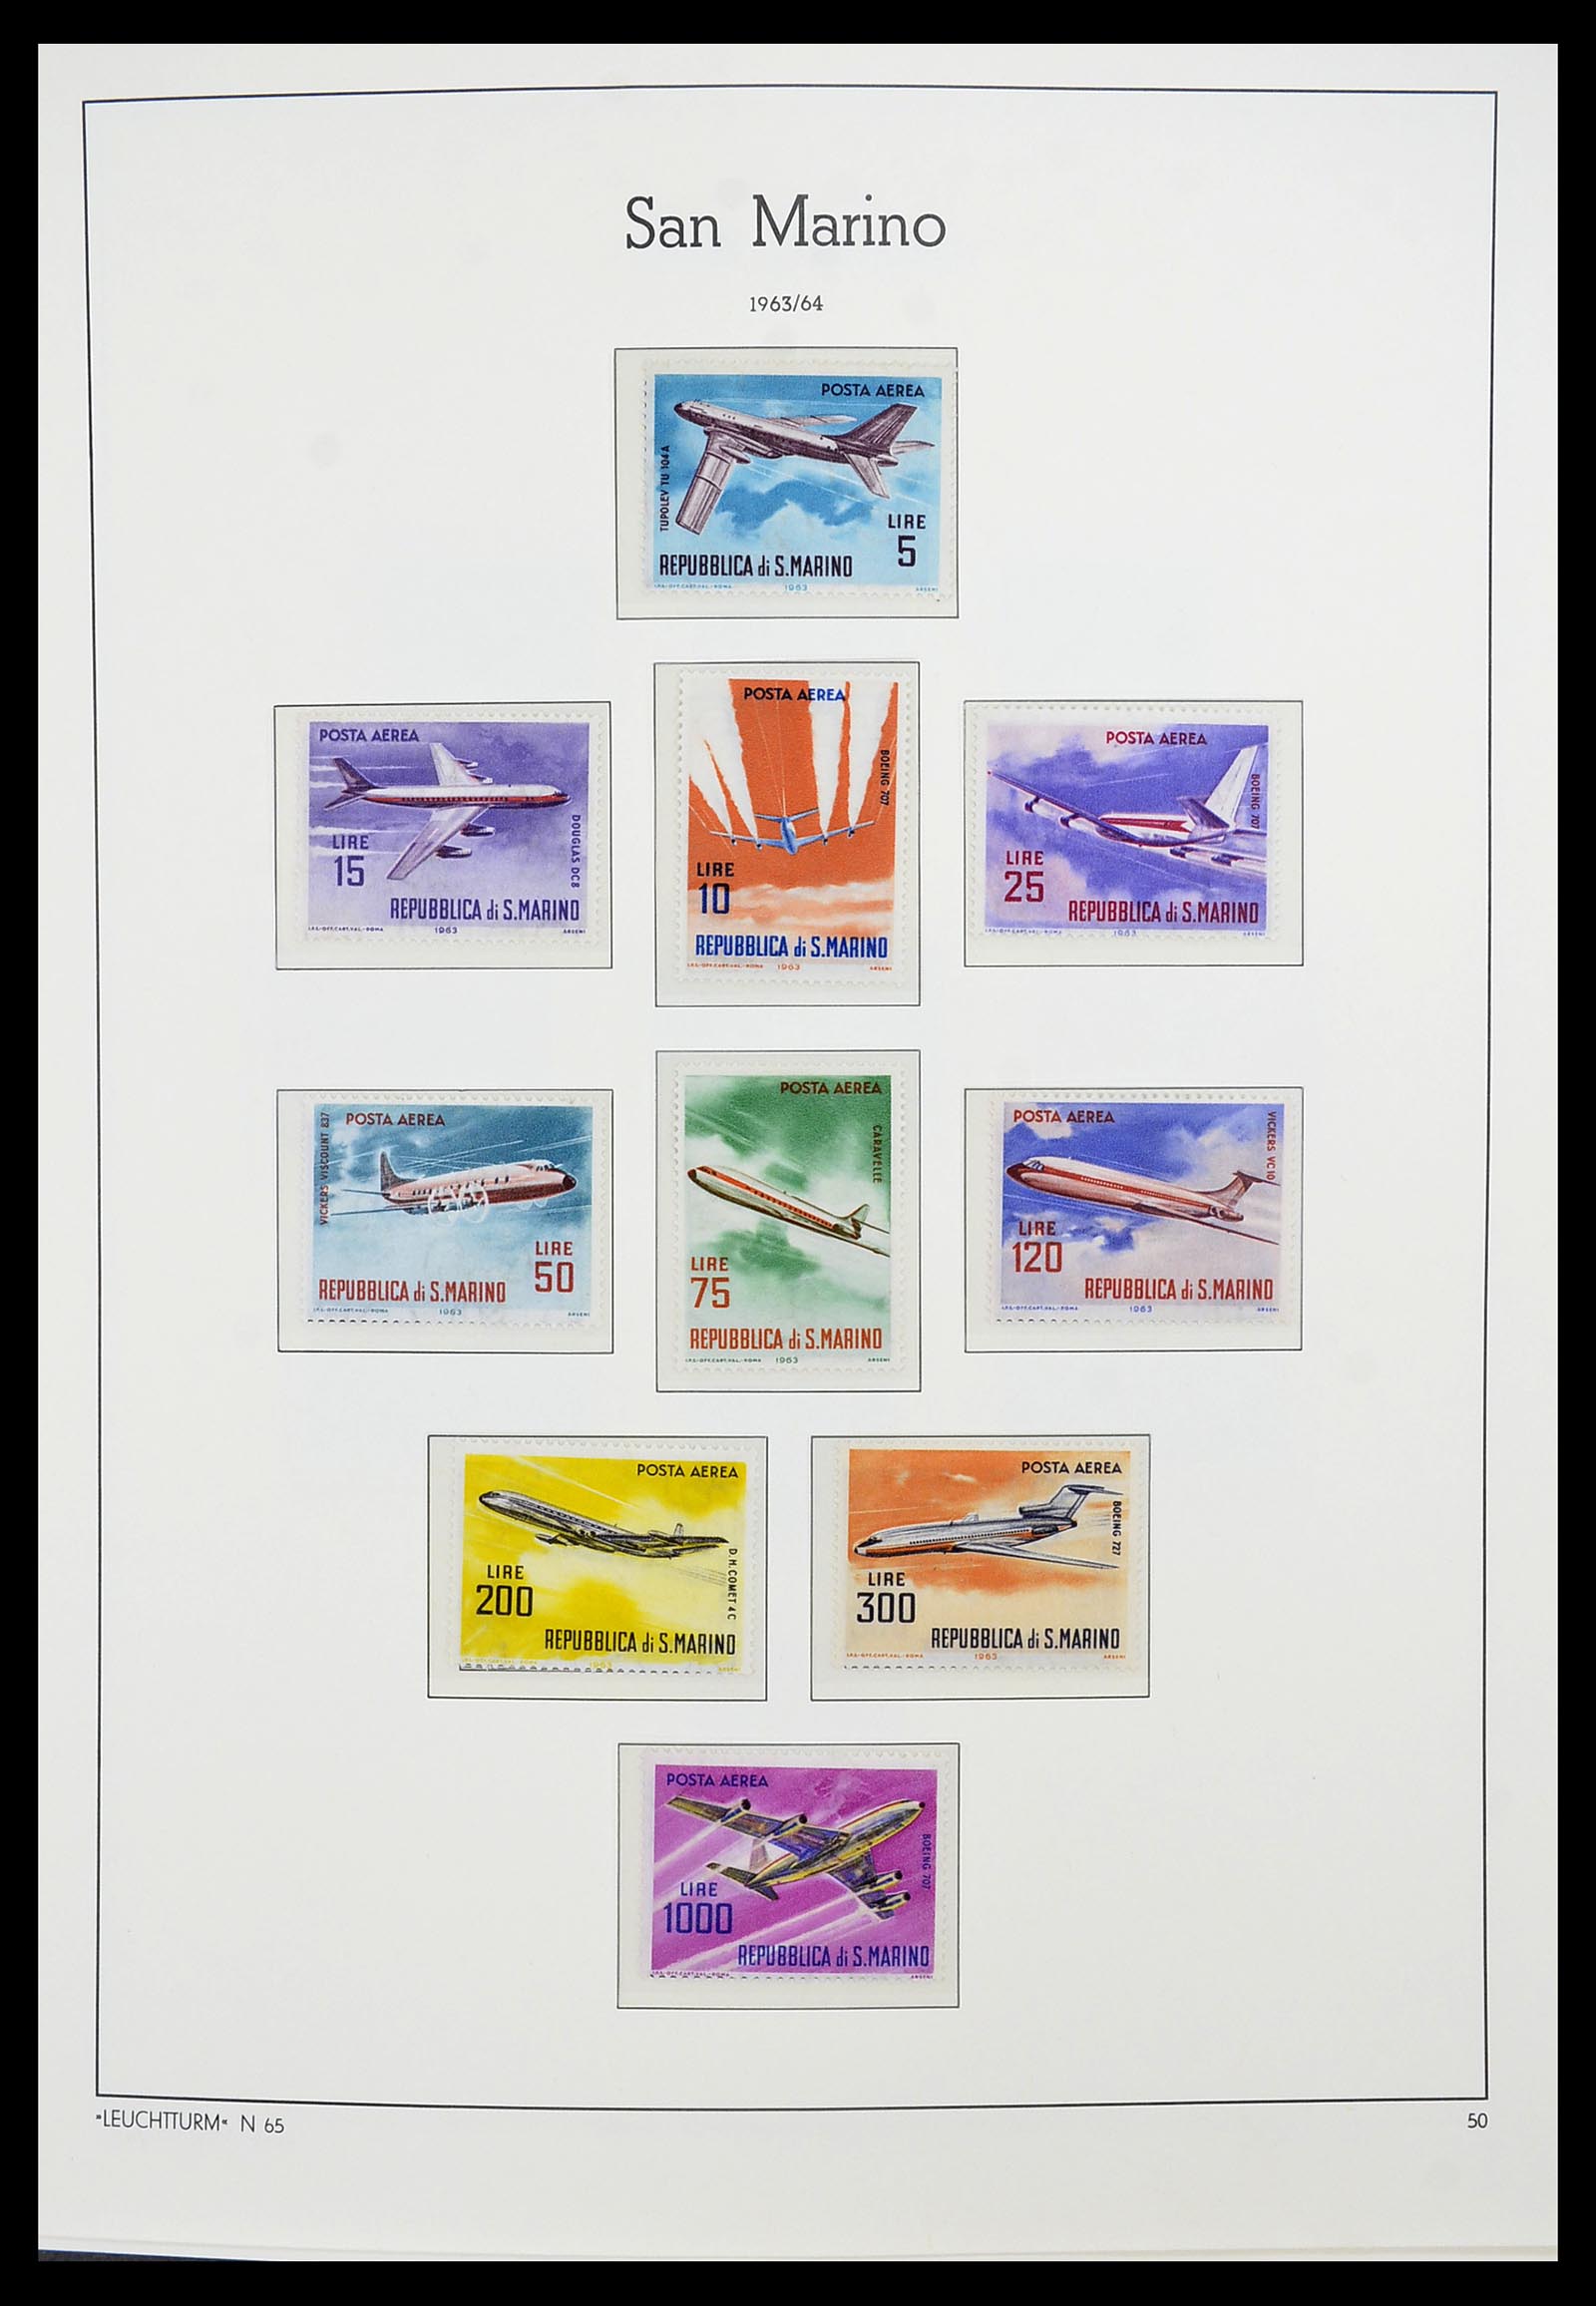 34243 094 - Stamp collection 34243 San Marino 1877-2008.